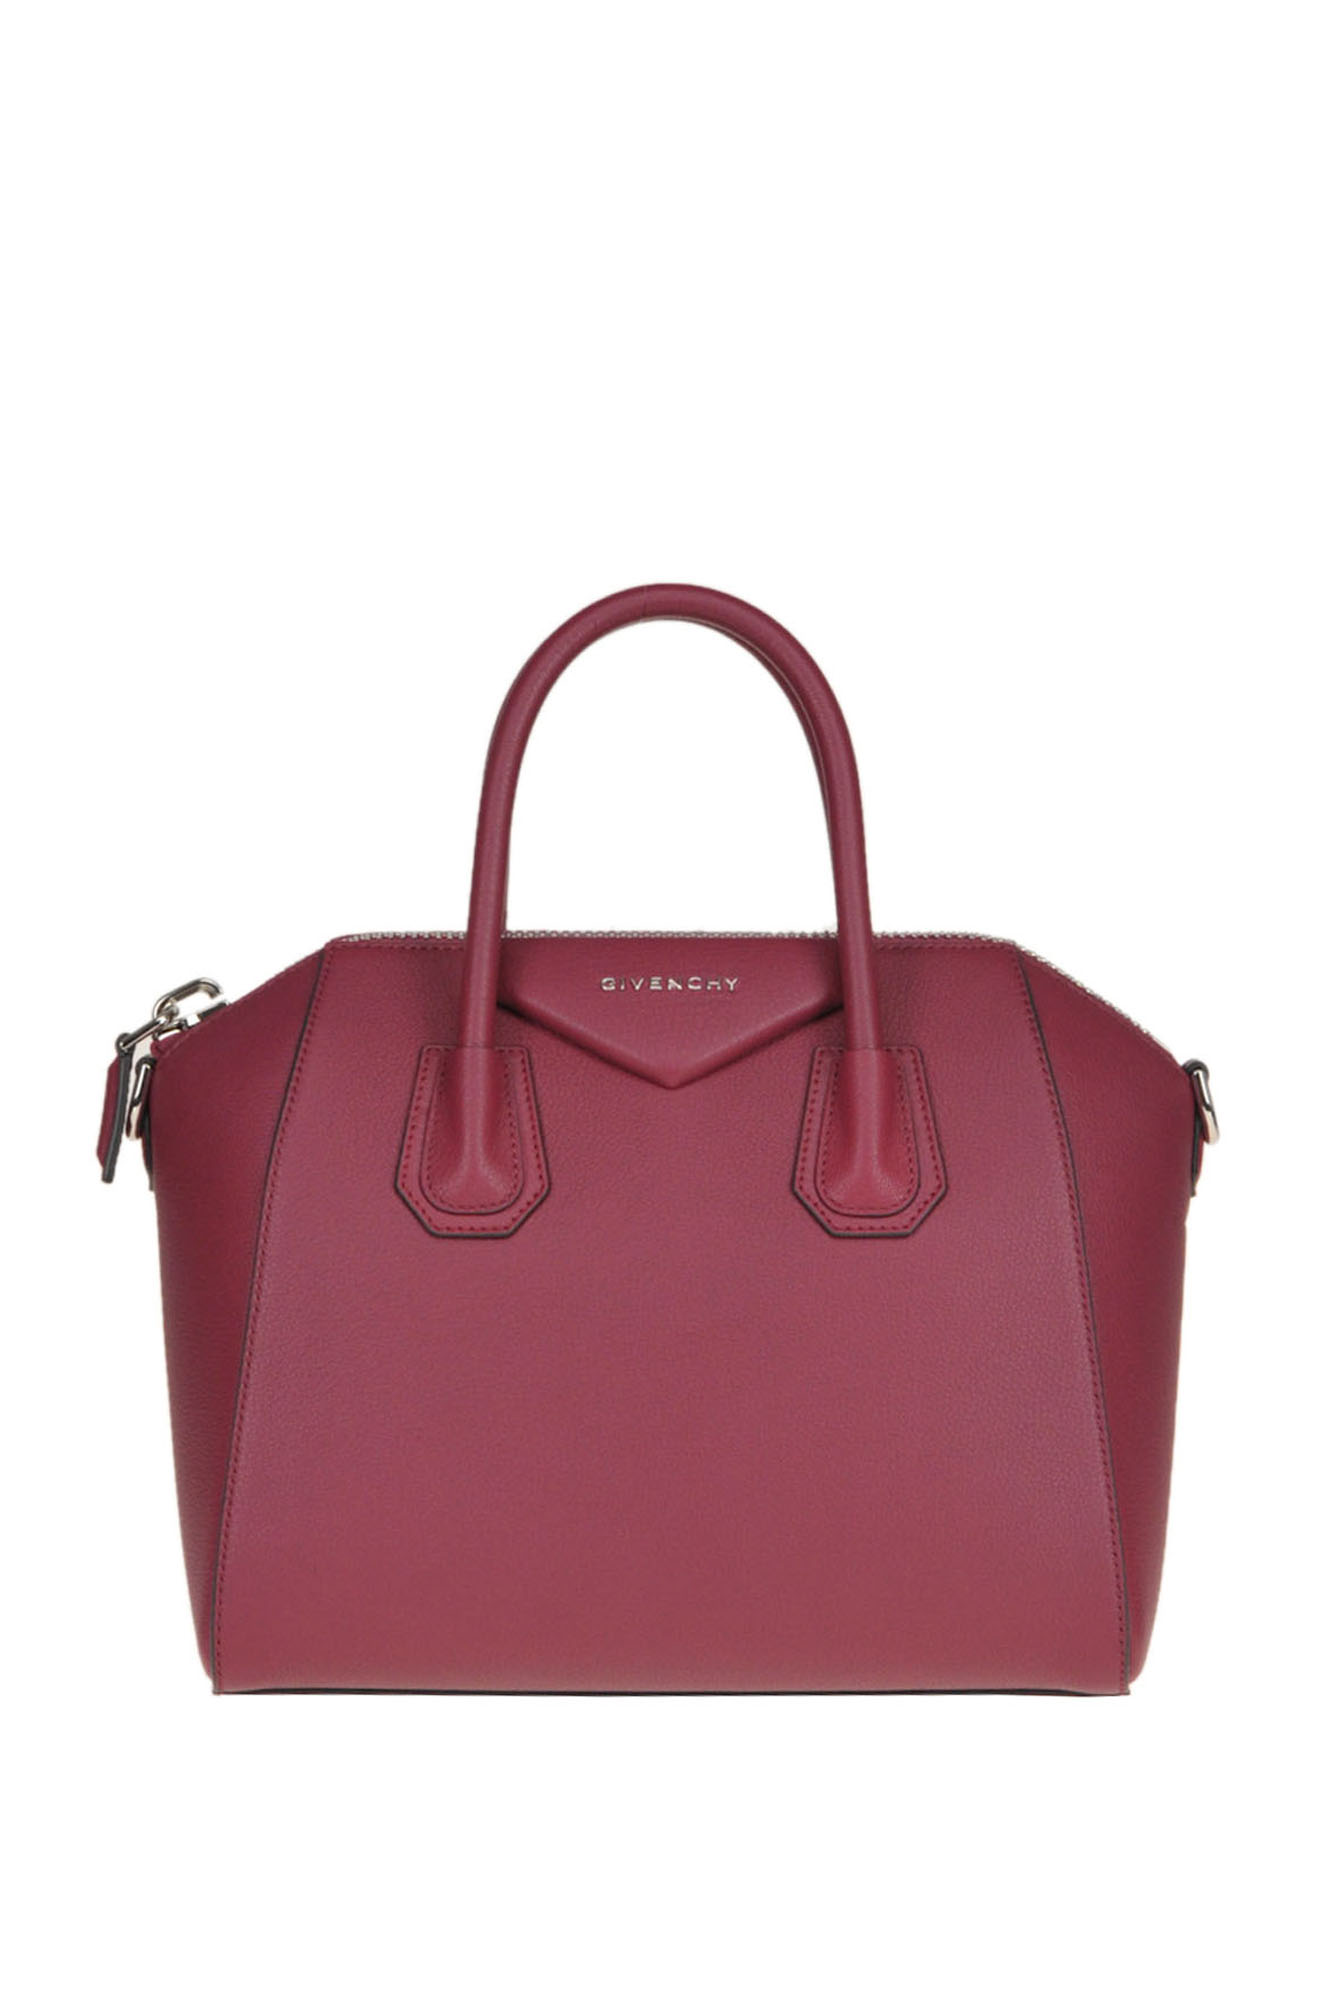 Givenchy Antigona Leather Bag In Raspberry